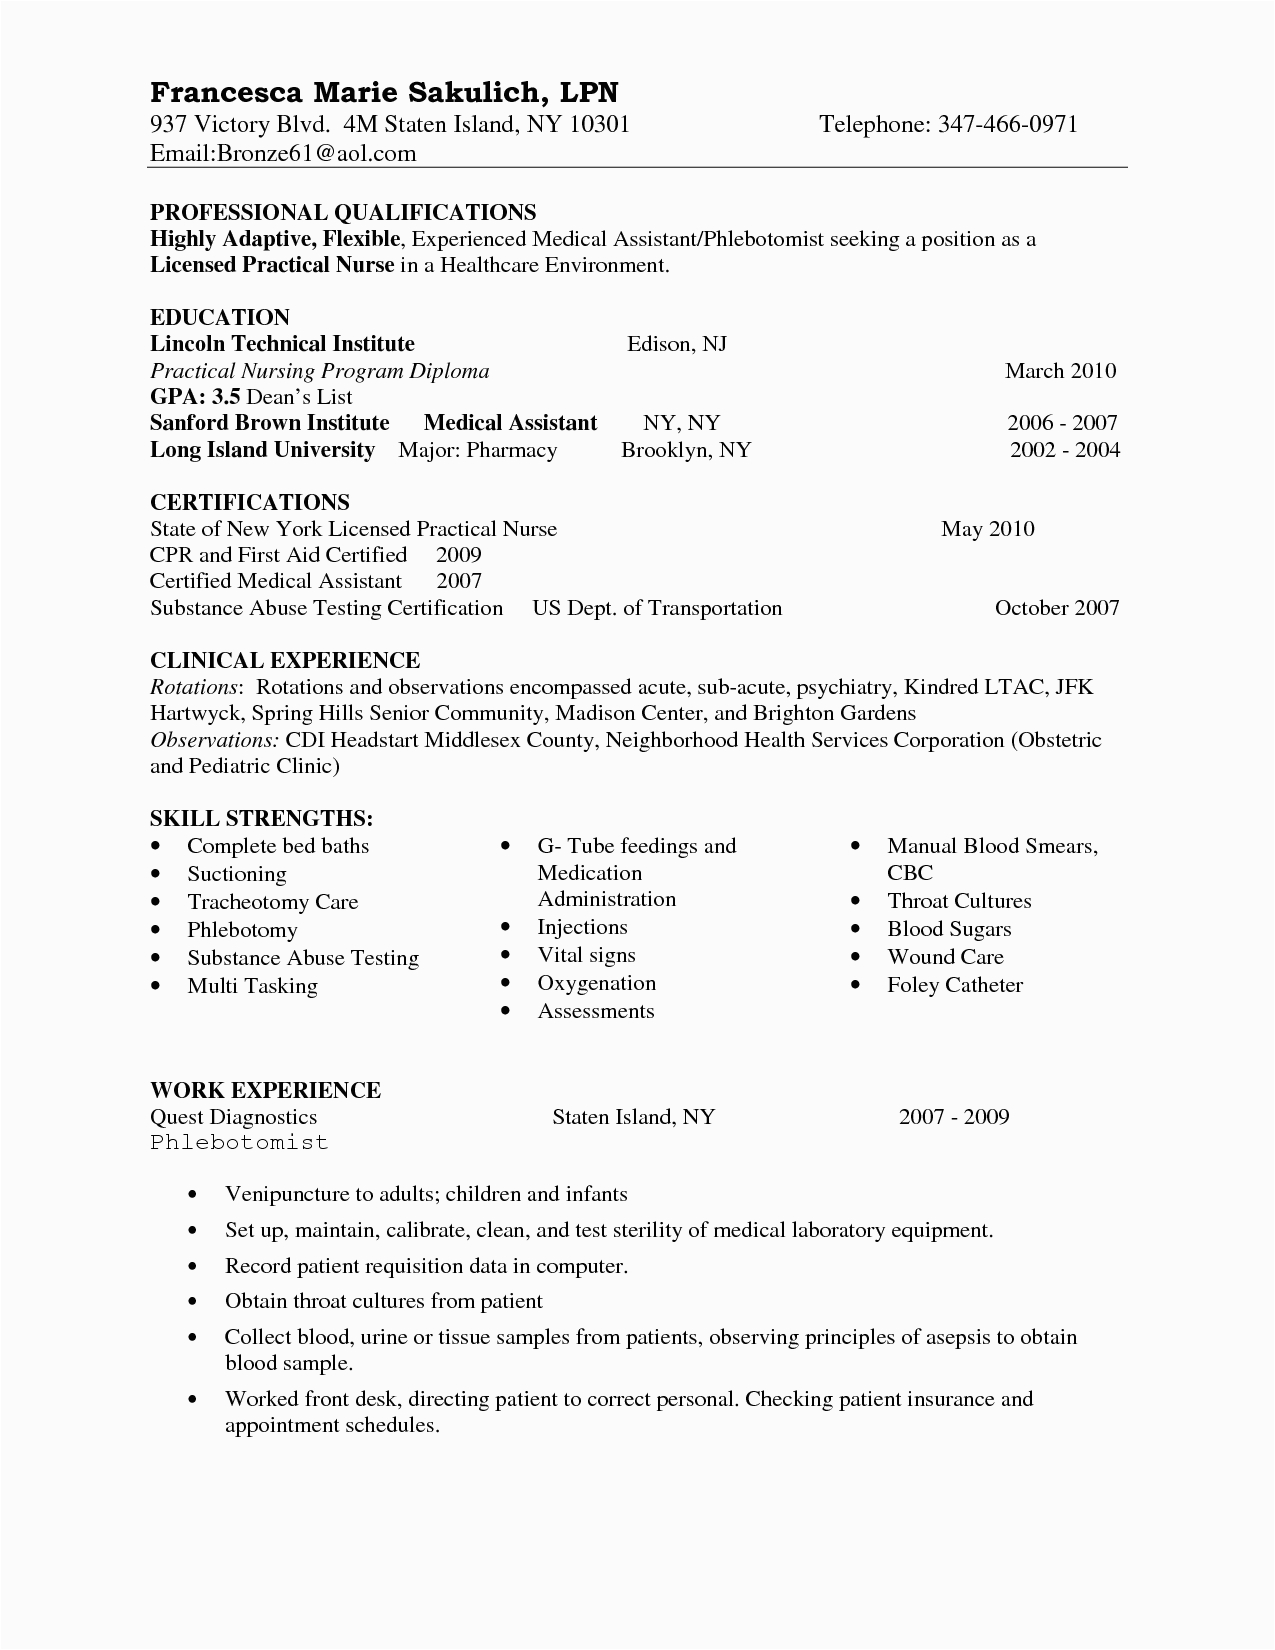 Sample Resume for New Graduate Lpn Nurse 21 Lpn Resume Example Sample Resumes